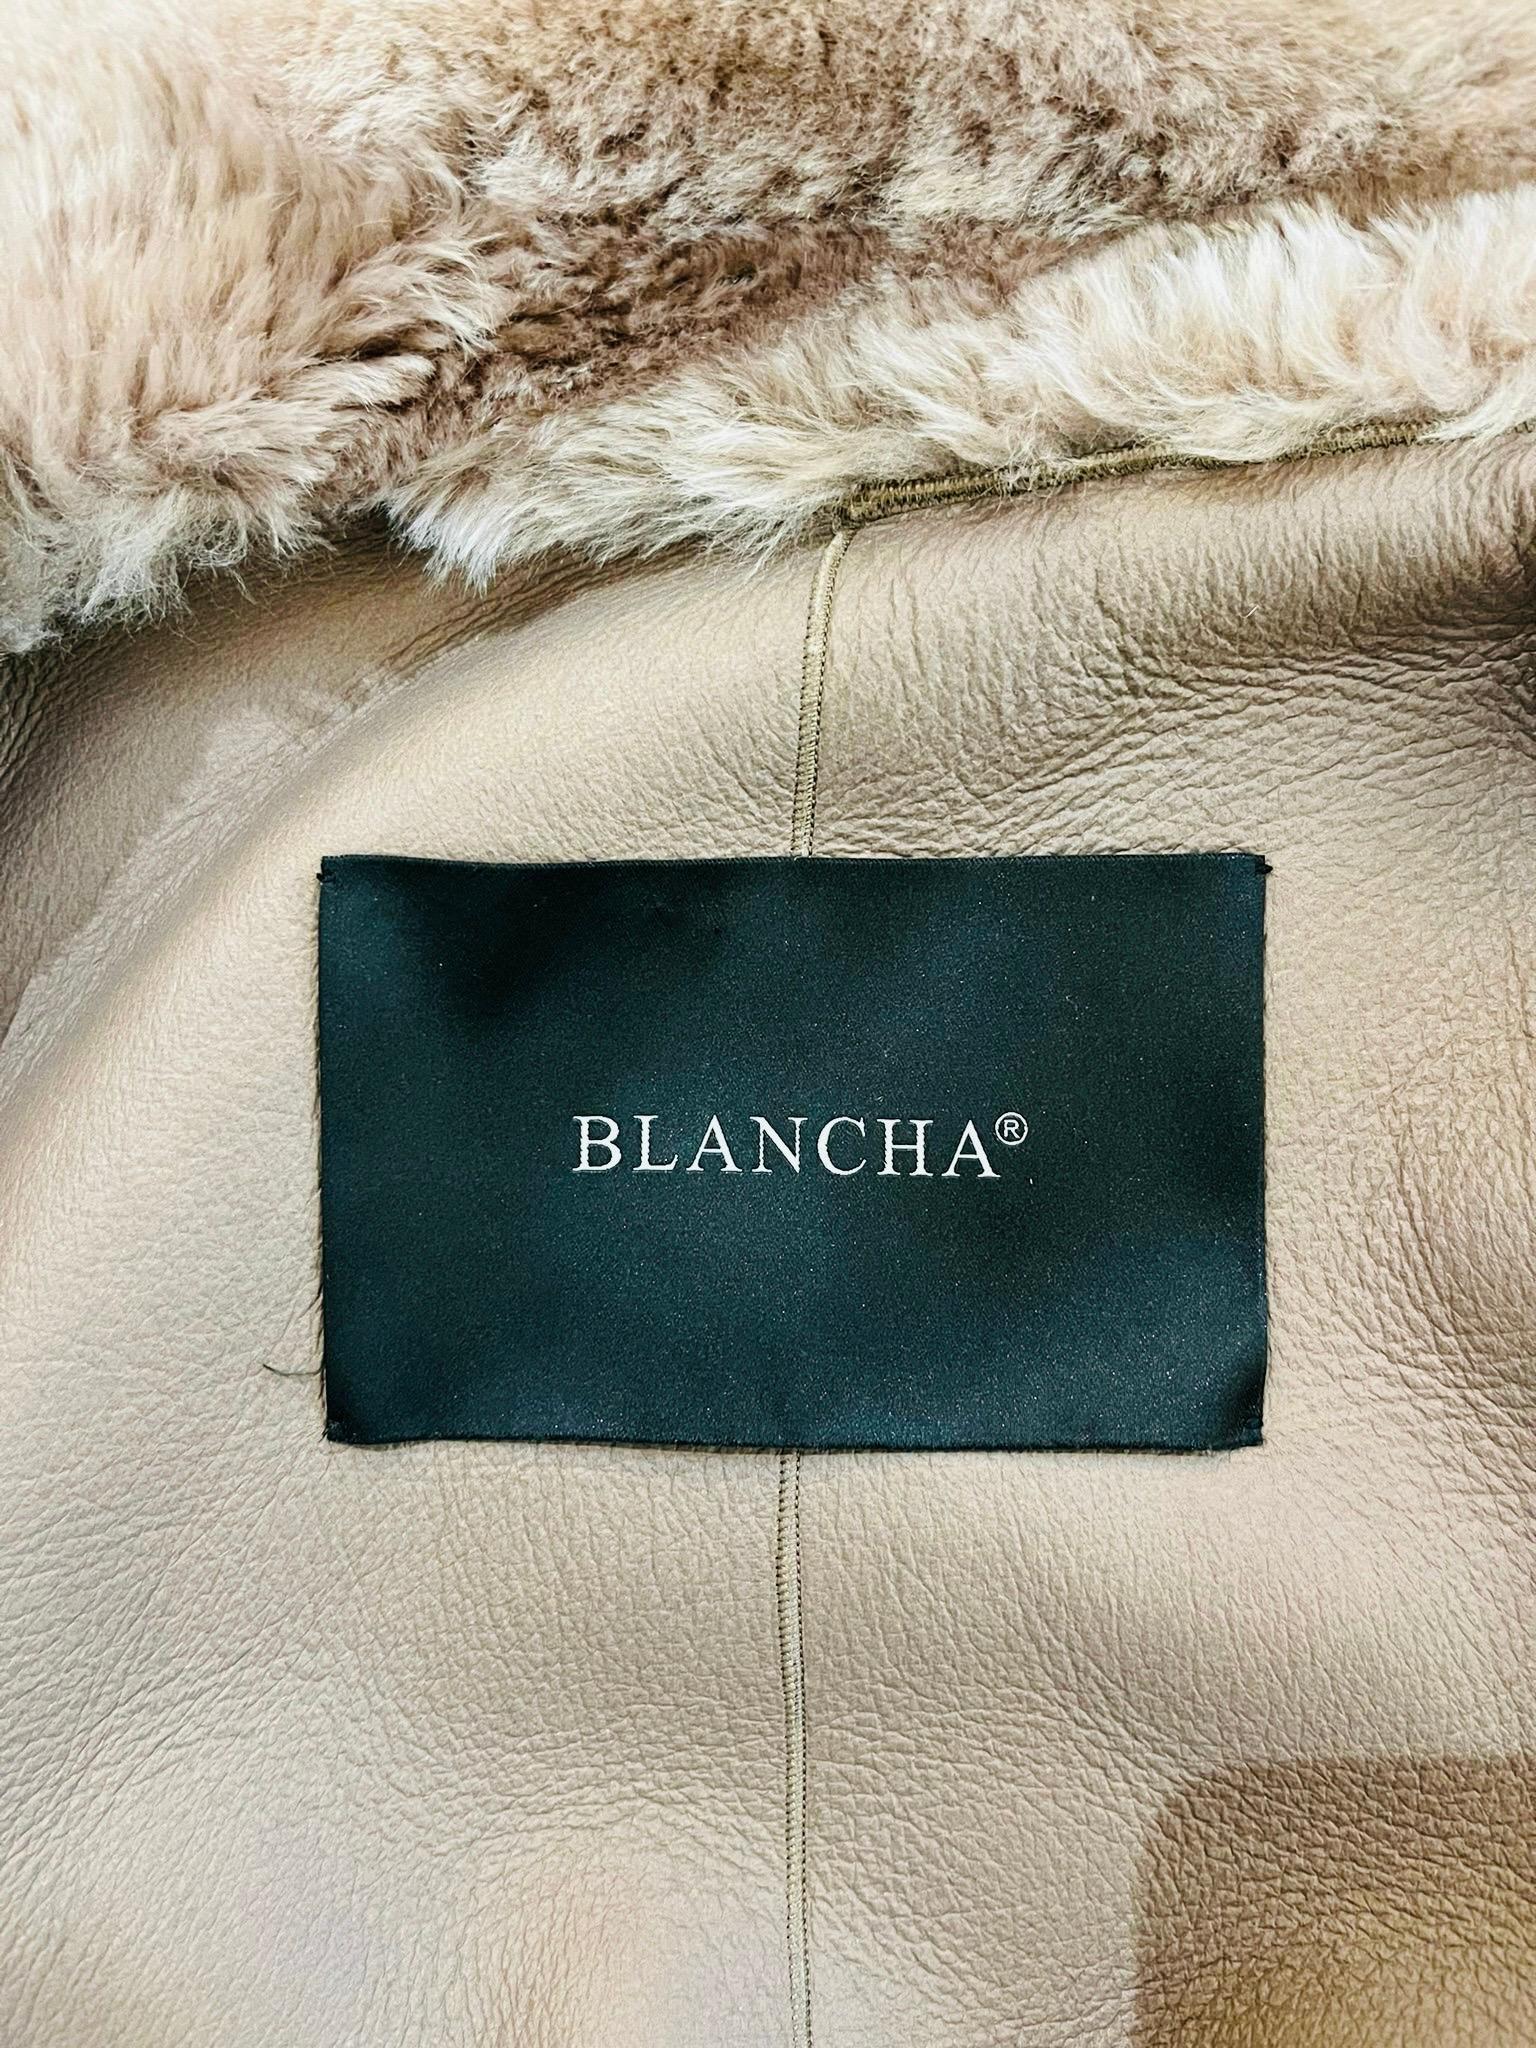 Blancha Sheepskin Teddy Coat For Sale 1